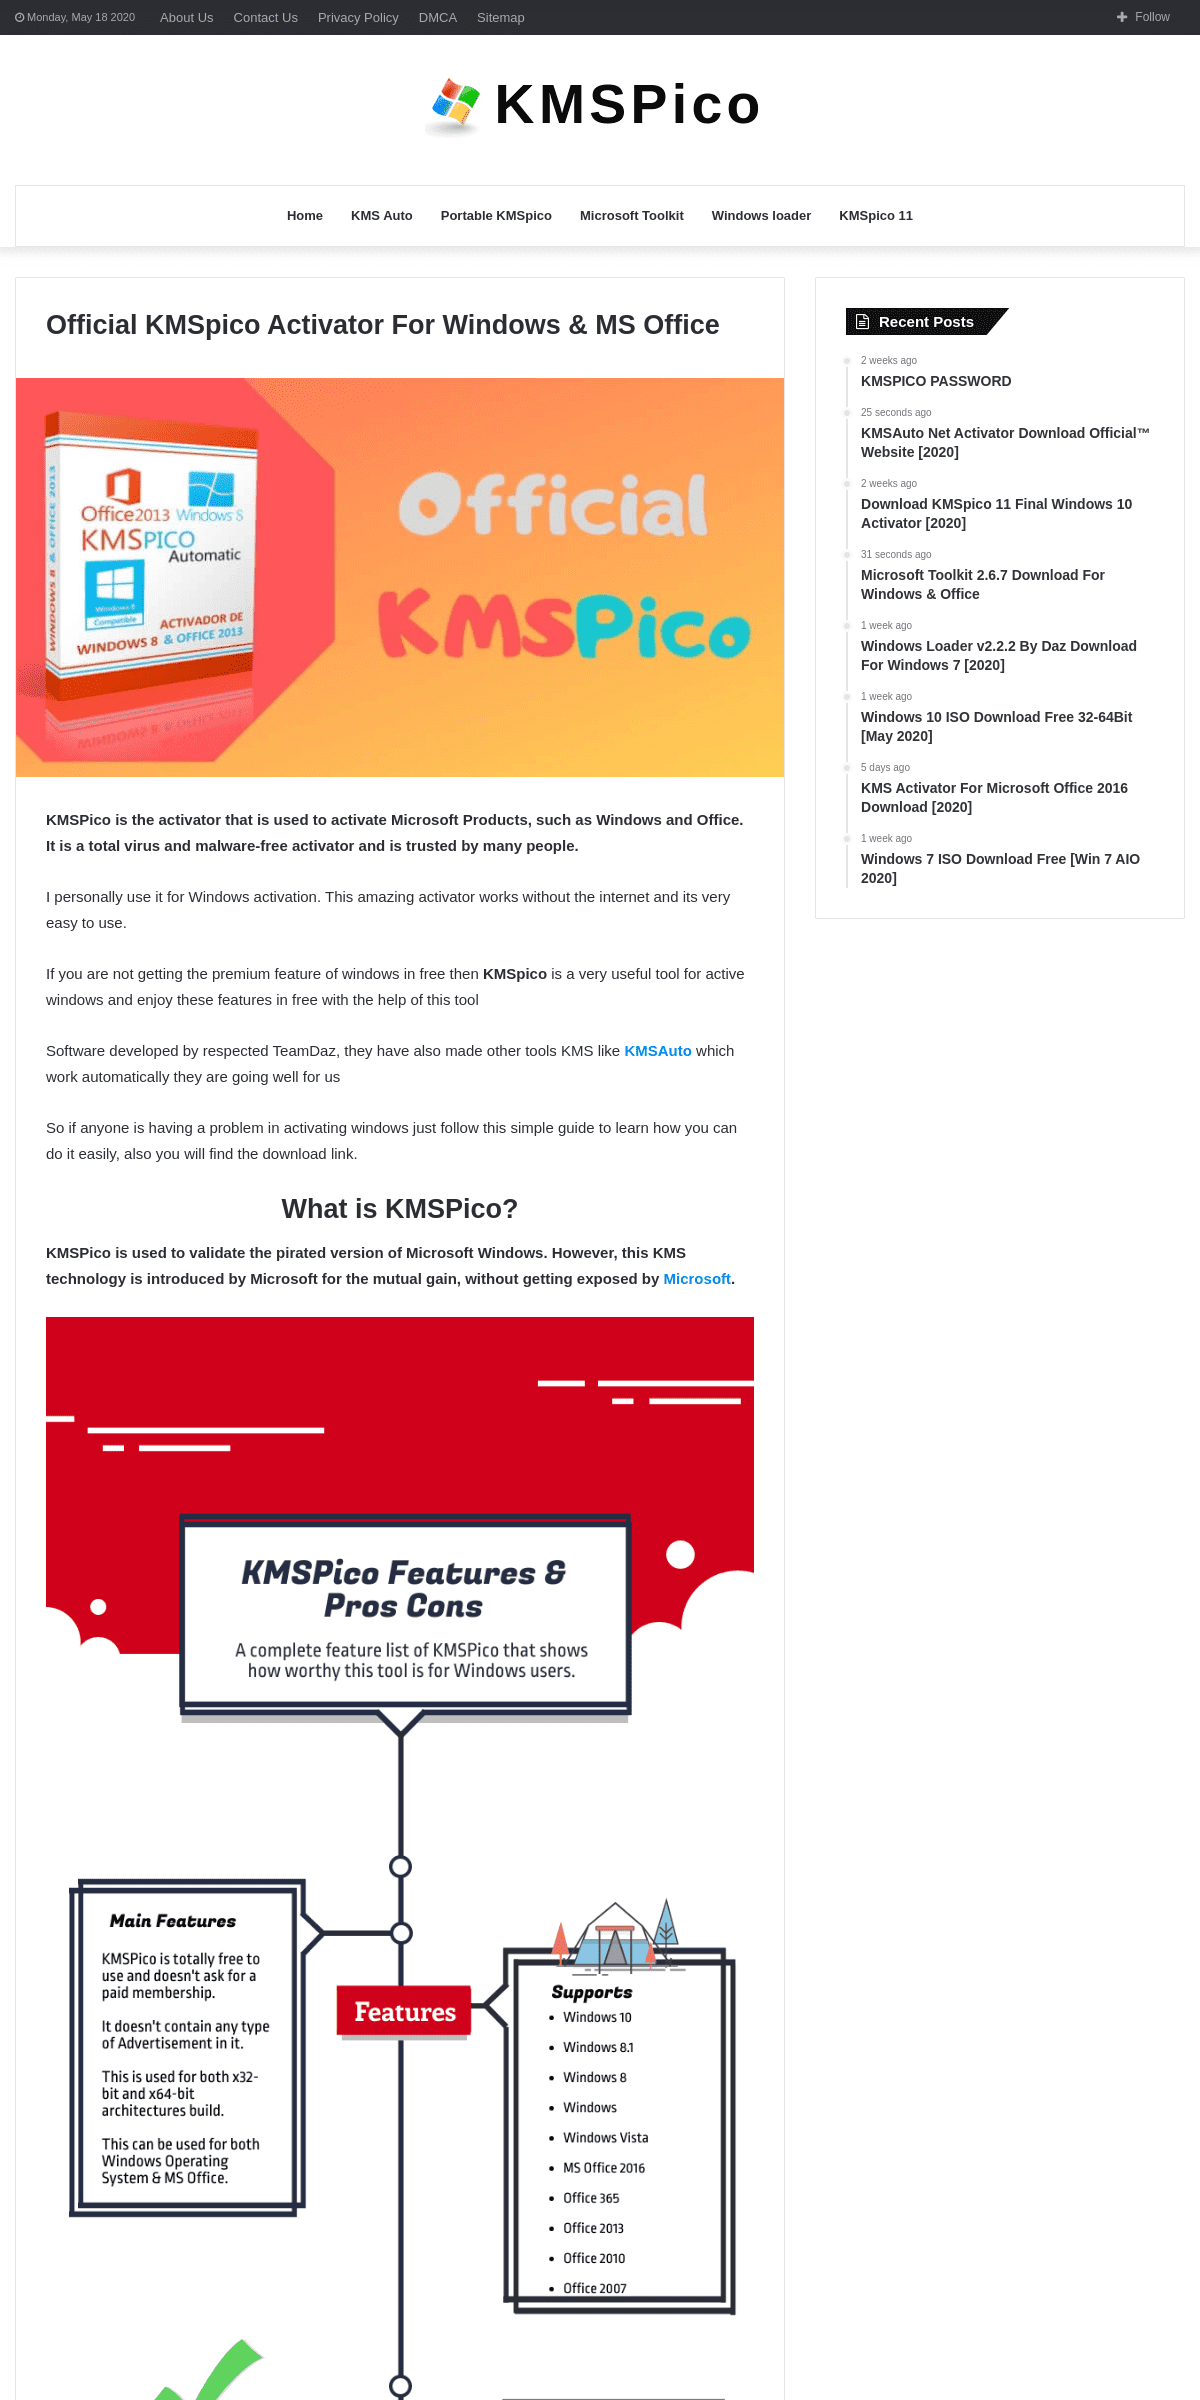 kmspico activator download official website 2020